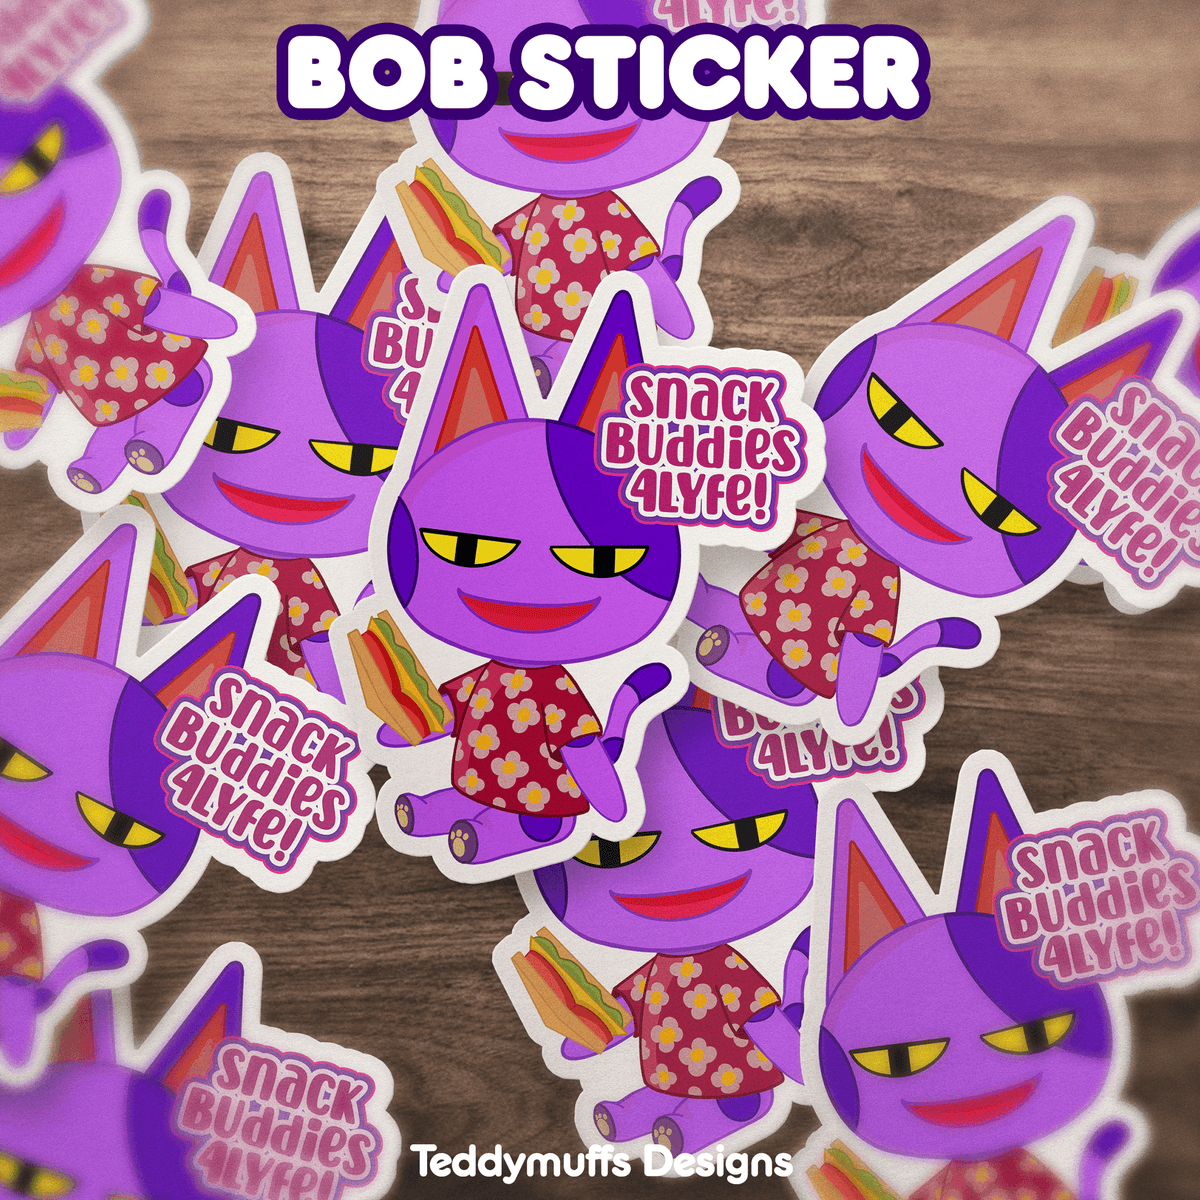 Bob &quot;Snack Buddy&quot; Sticker - Teddymuffs Designs